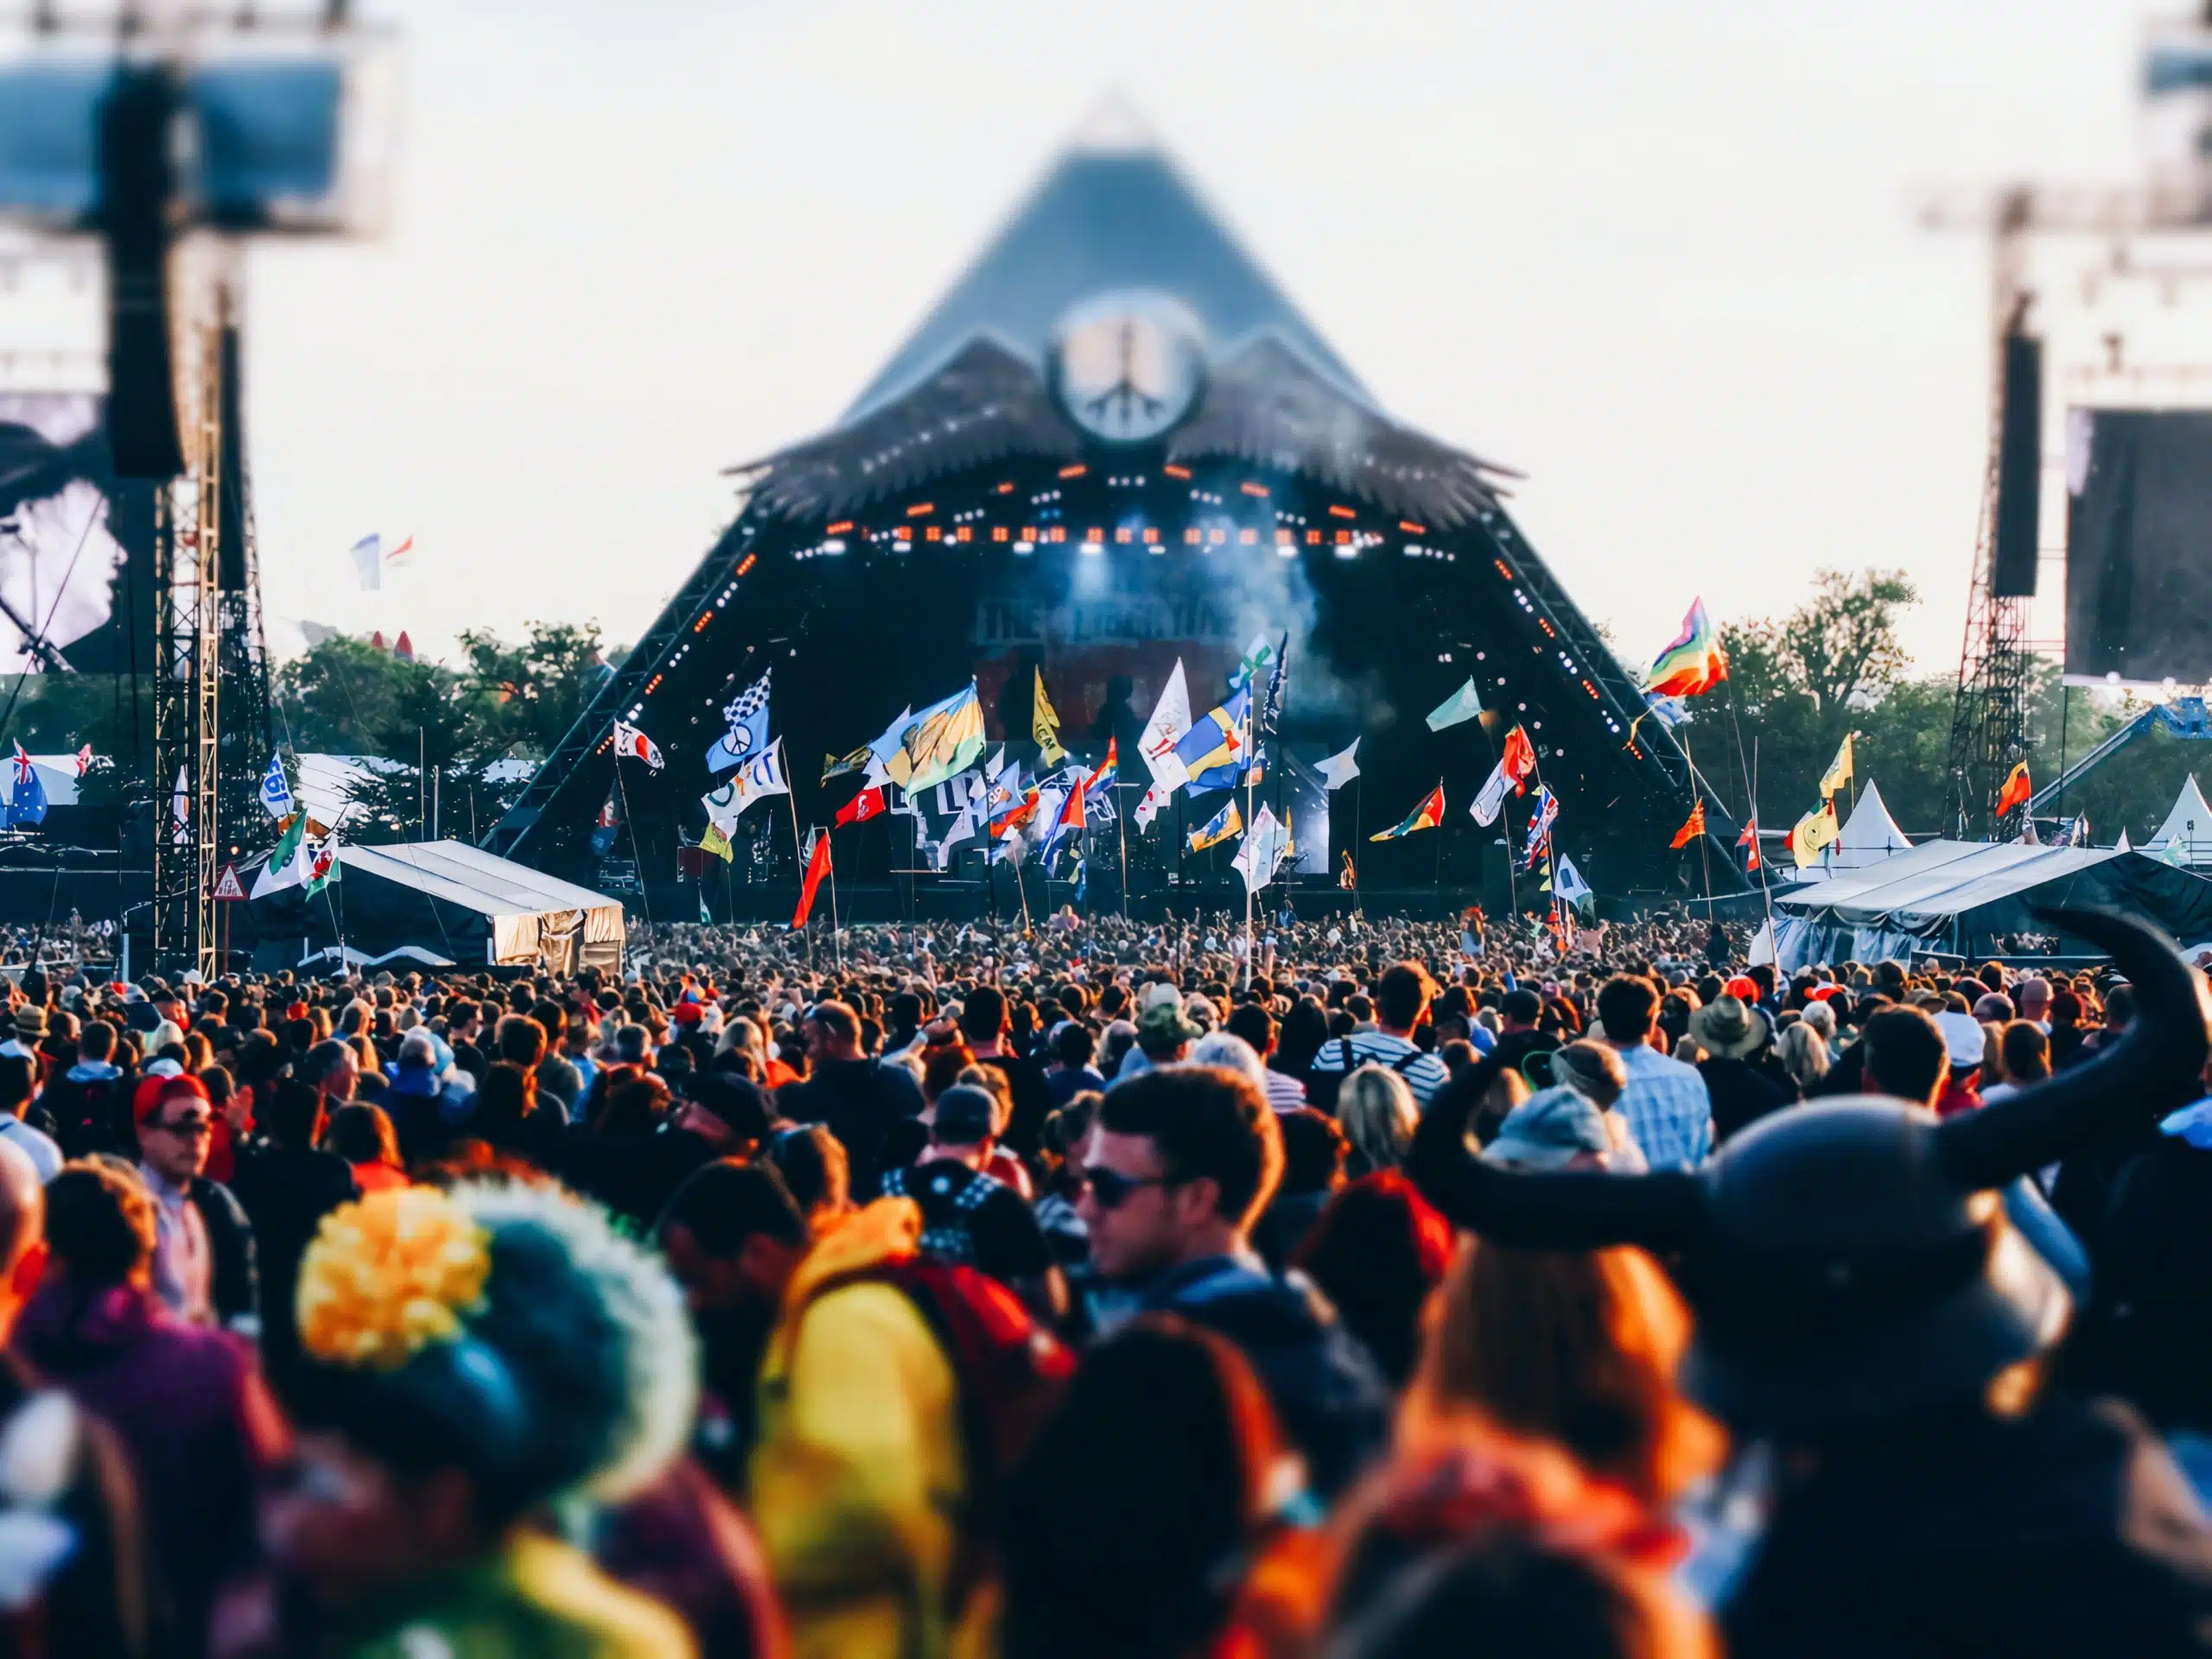 Glastonbury Festival's pyramid stage